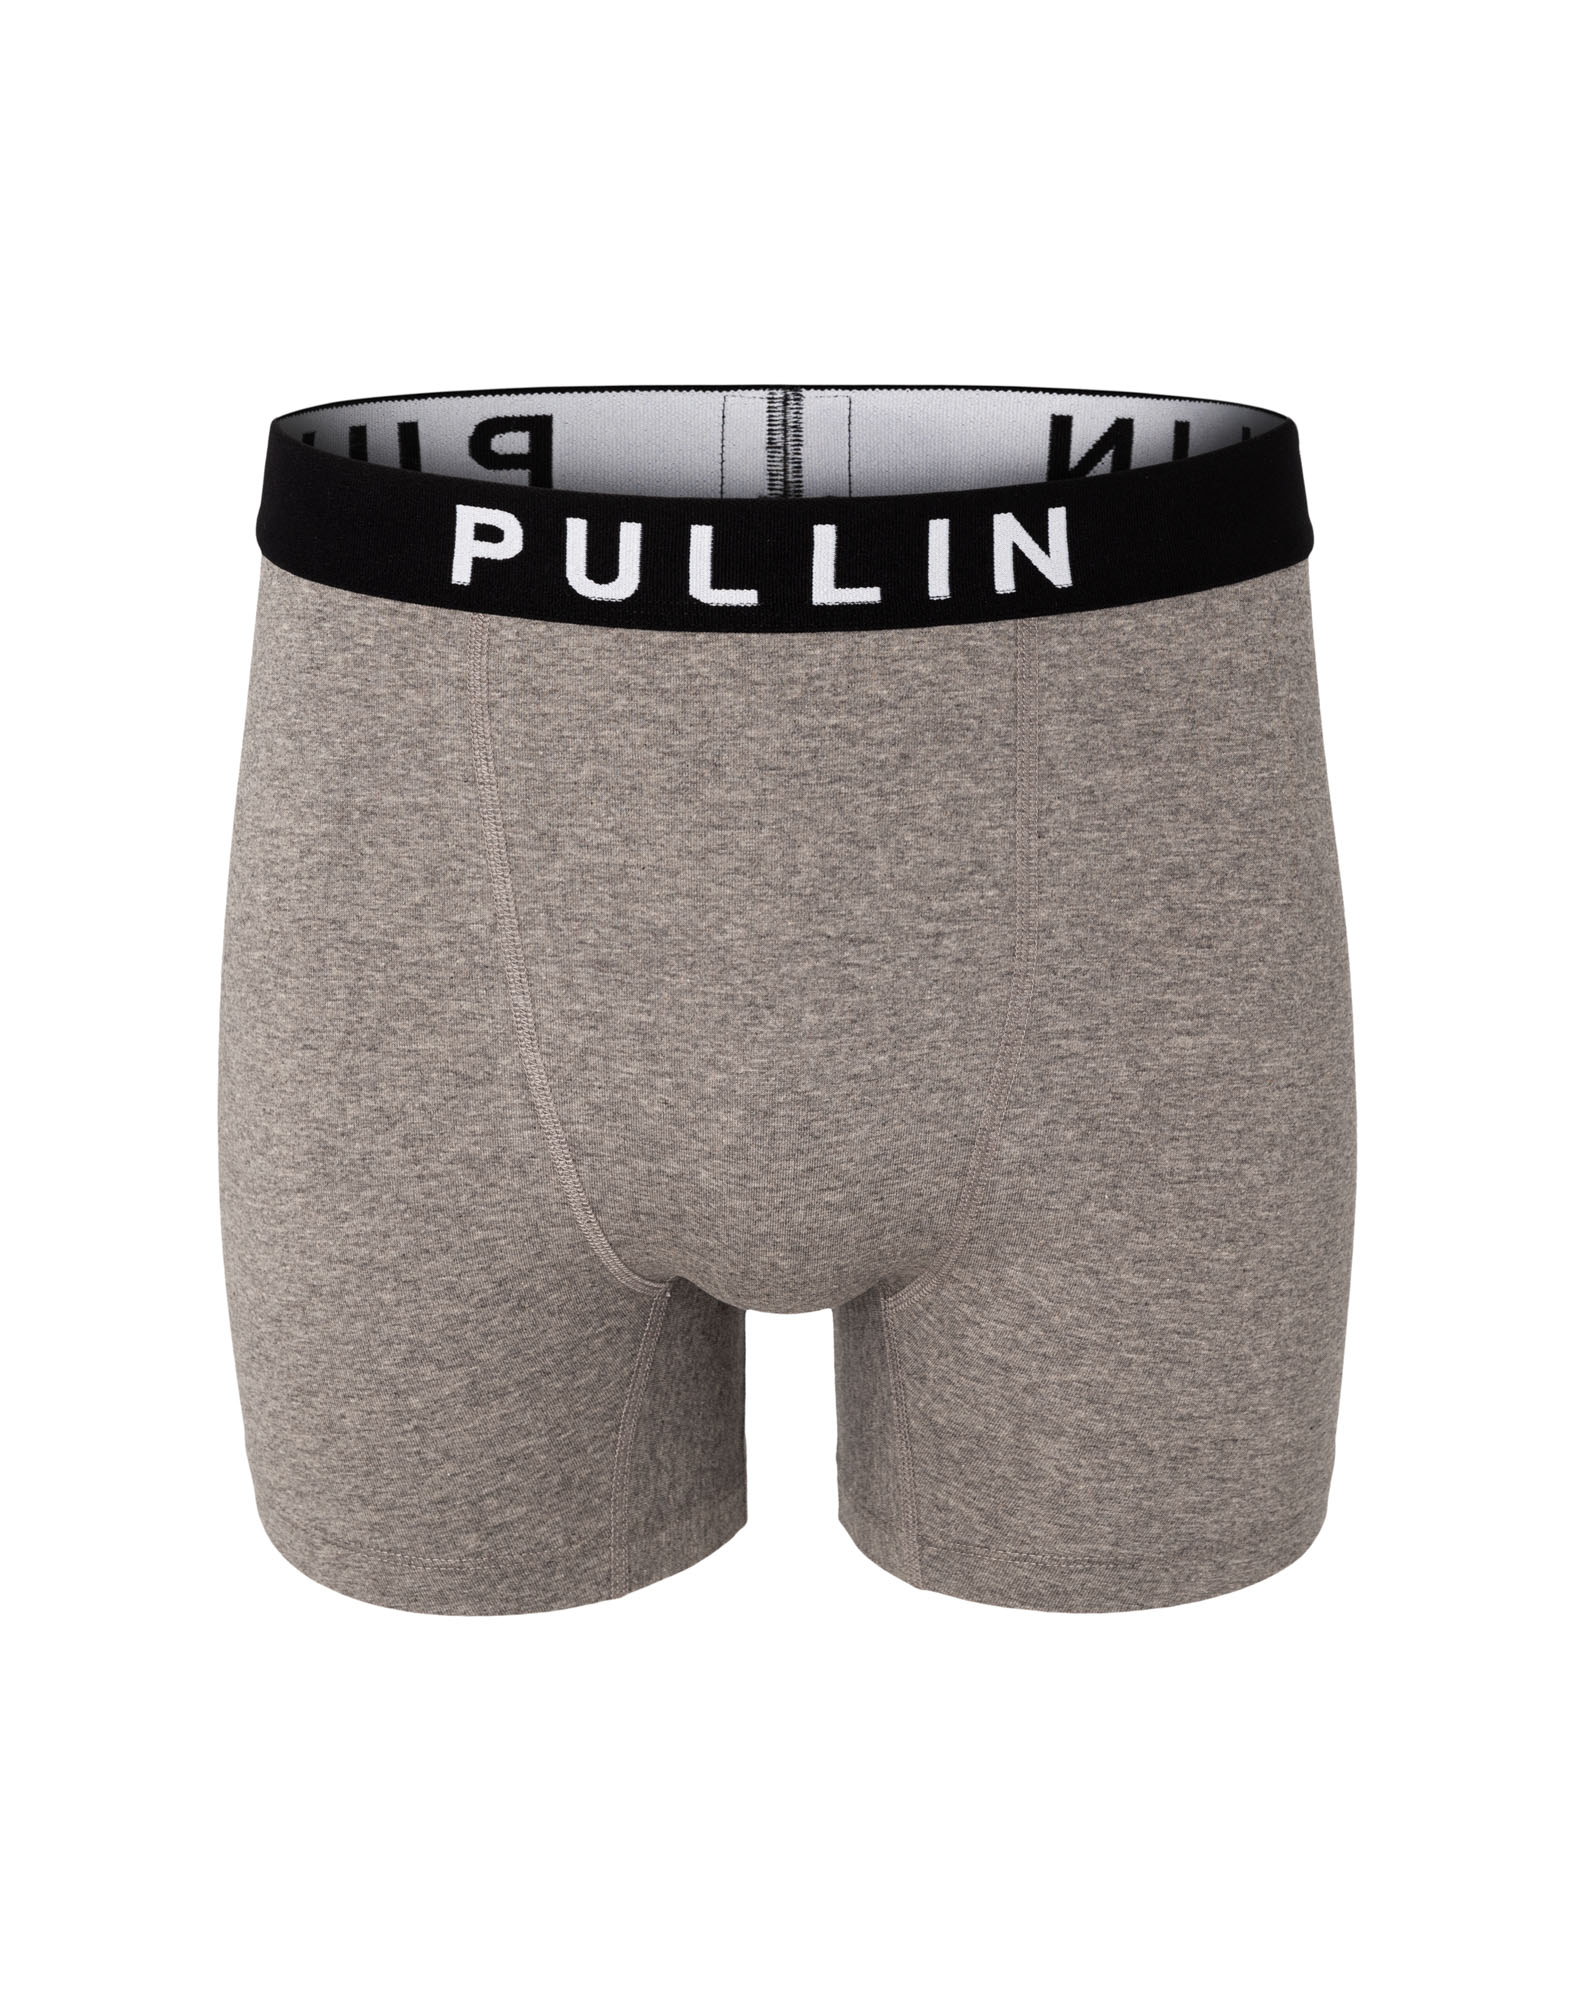 GREY MEN'S TRUNK FASHION 2 COTON GREY21 - Men's underwear PULLIN